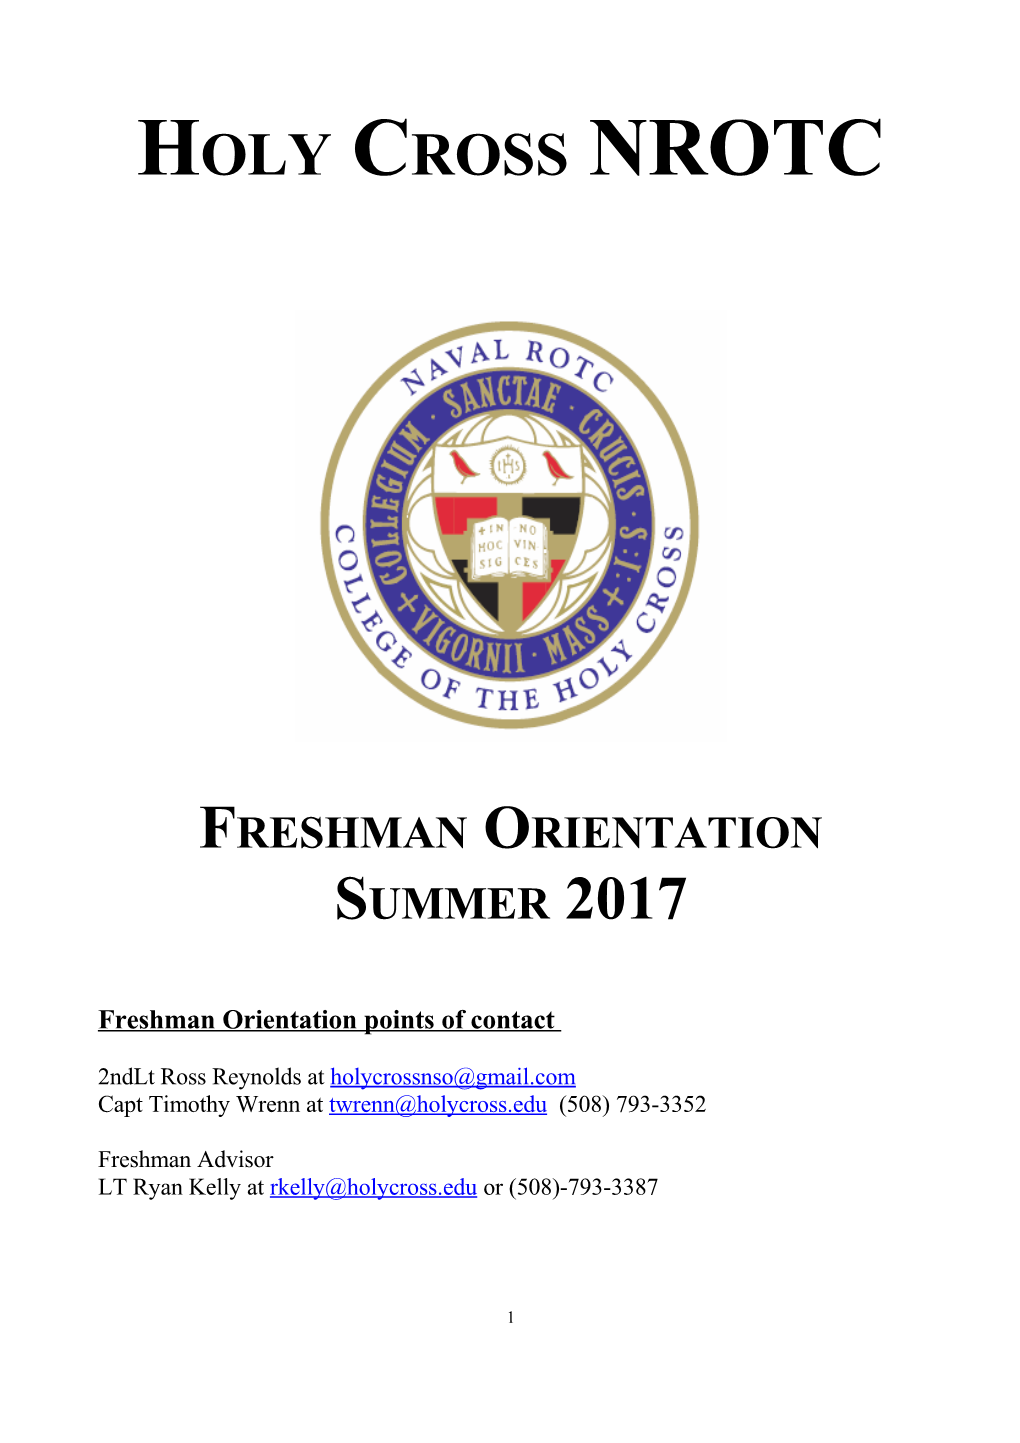 Freshman Orientation Points of Contact